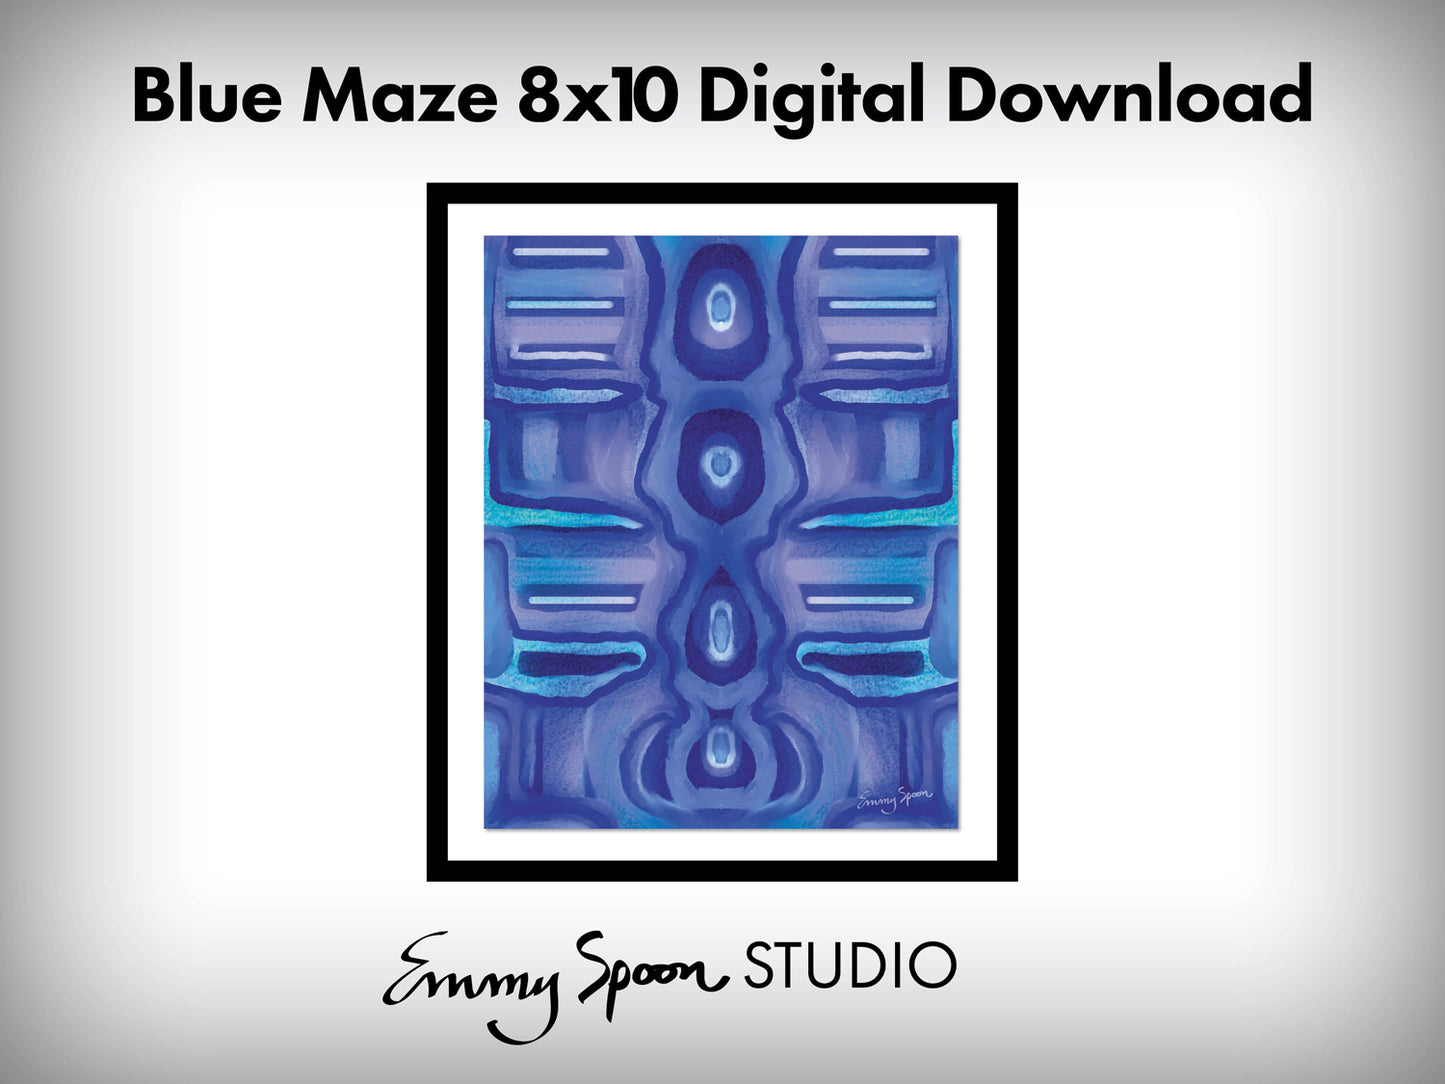 Blue Maze 8x10 Digital Download by Emmy Spoon.